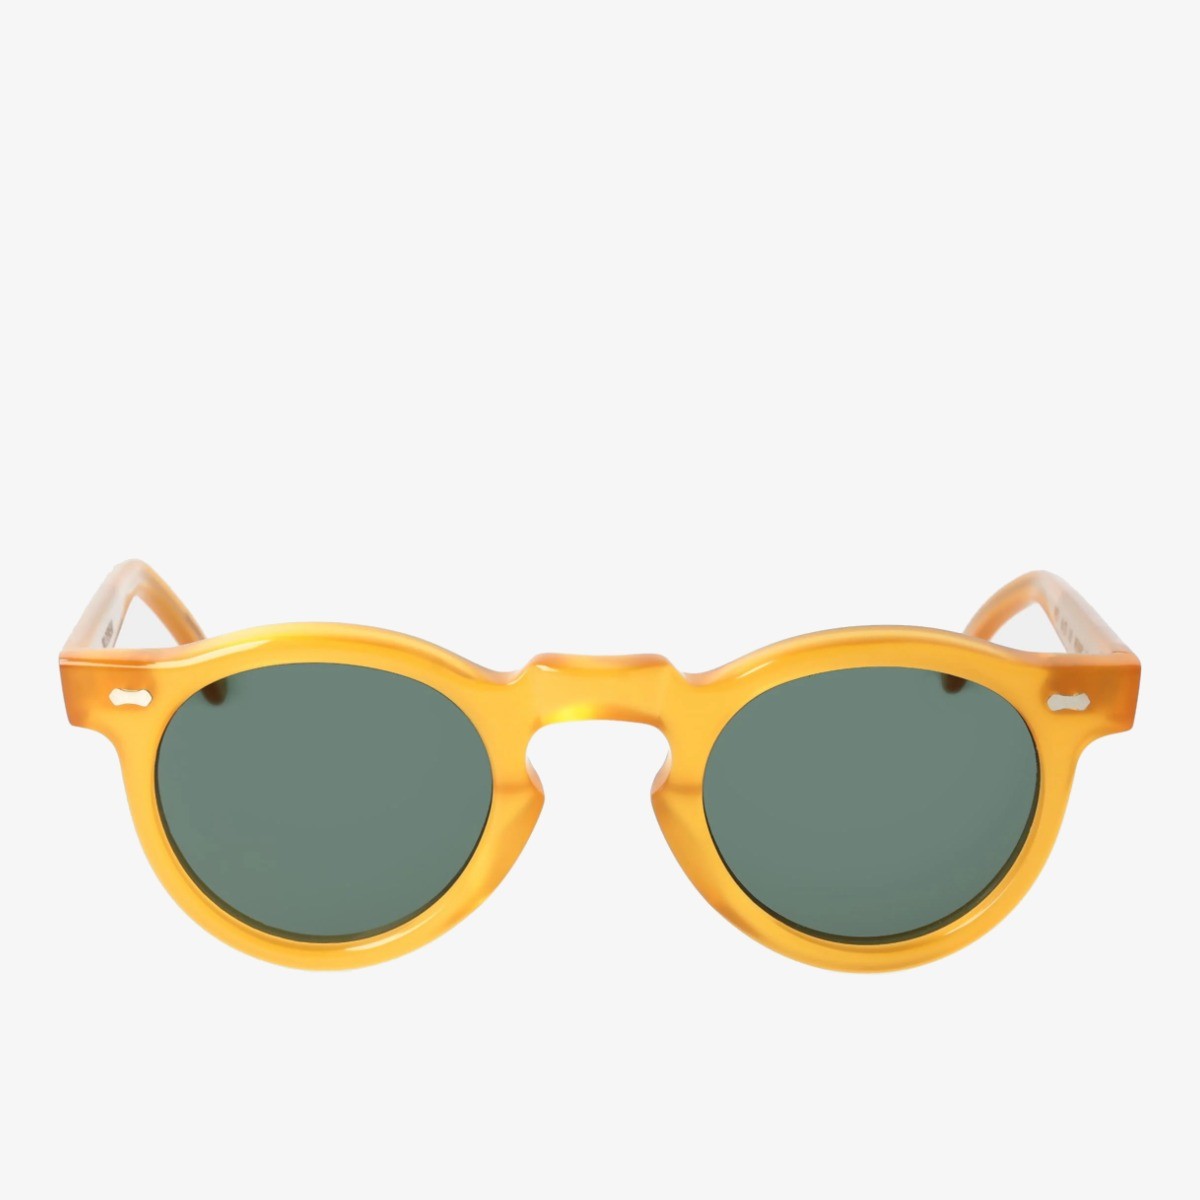 TBD Eyewear Welt yellow frame green lenses sunglasses